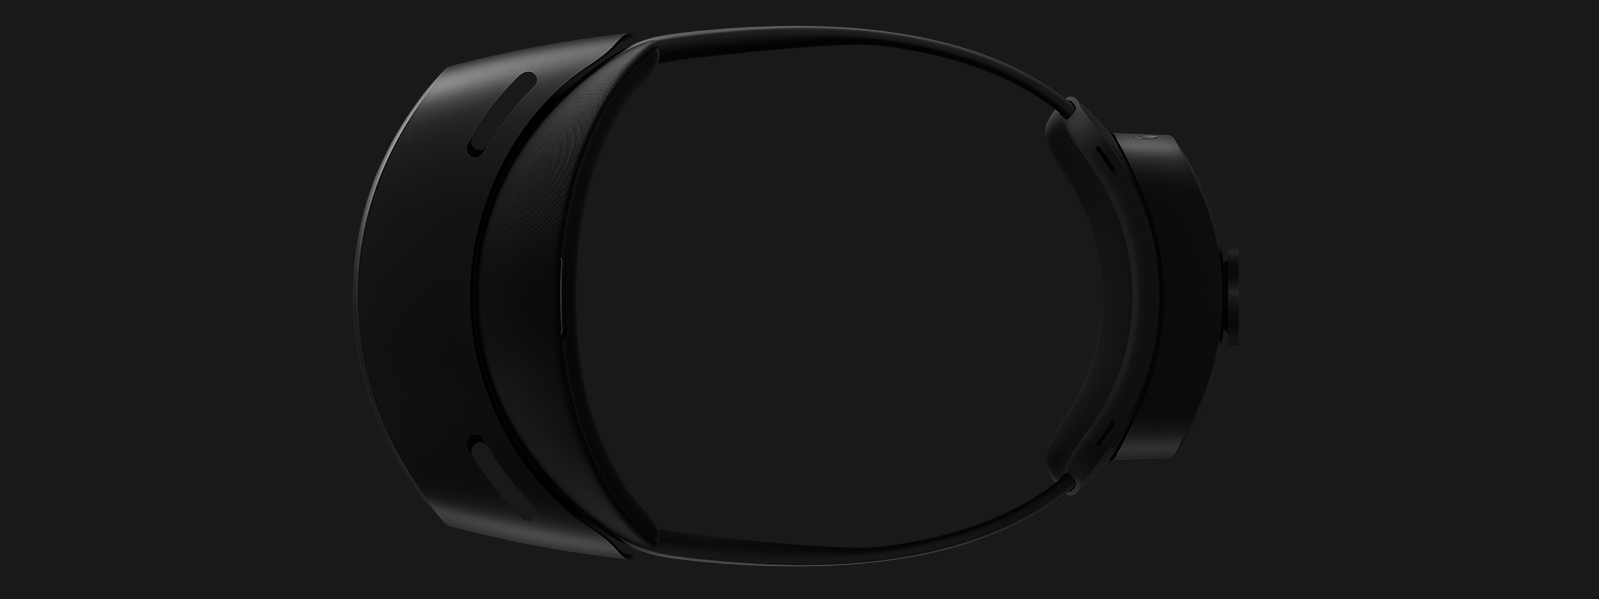 HoloLens2의 하양식 뷰